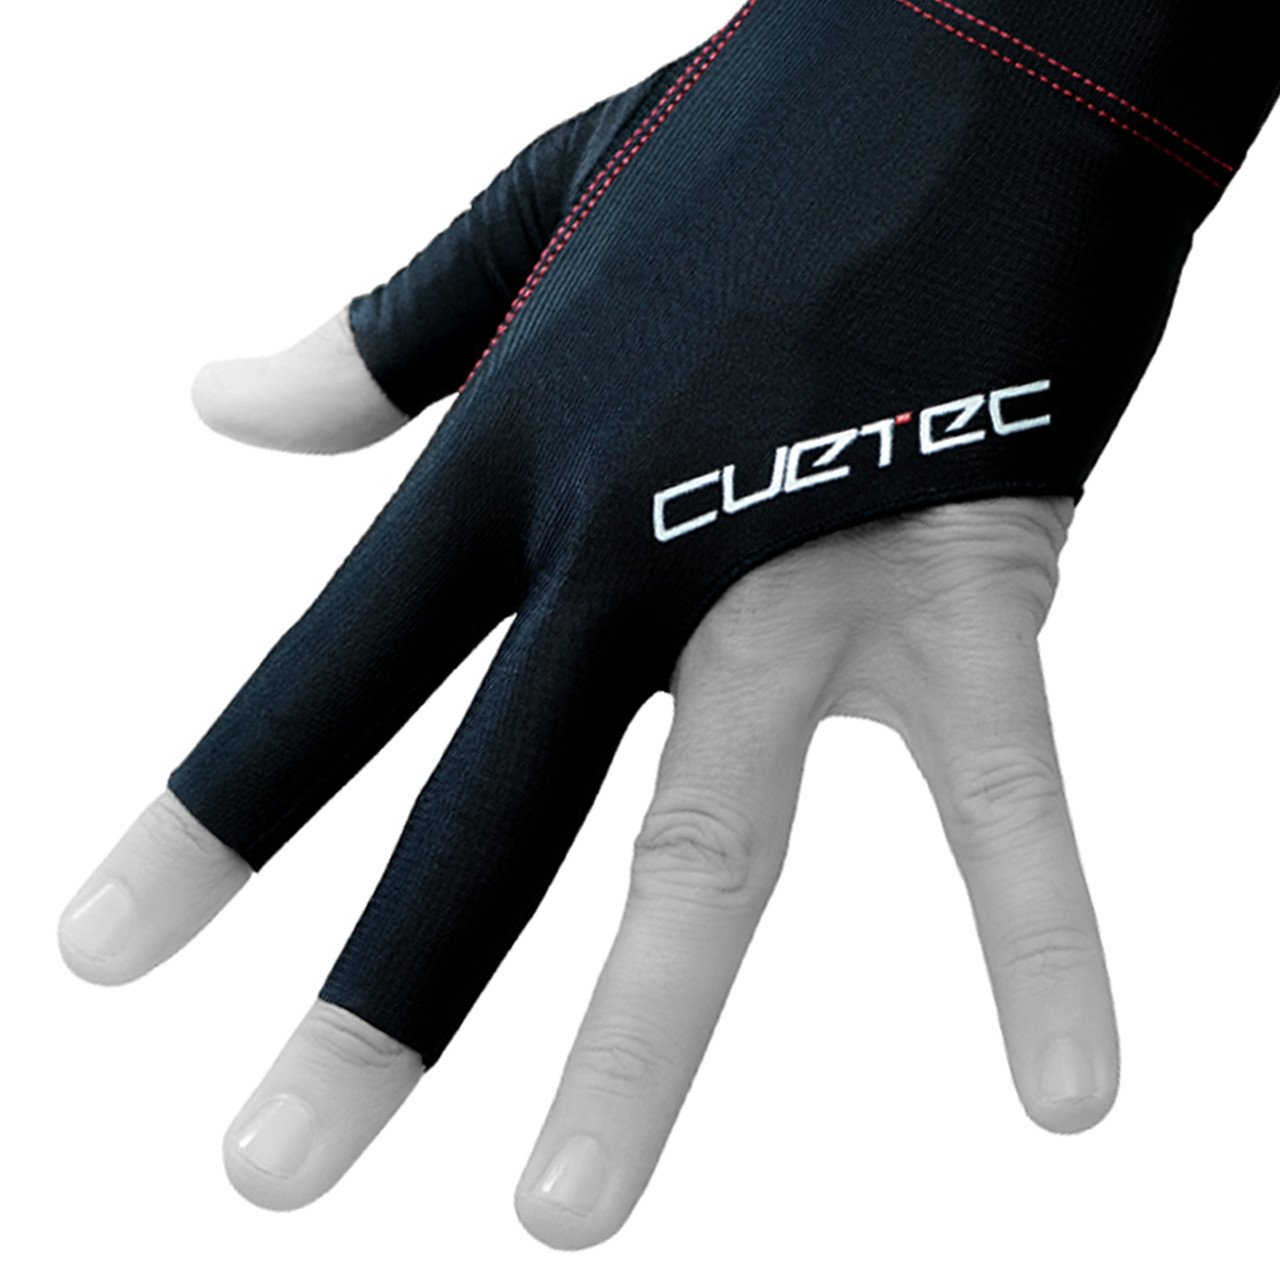 Cuetec Axis High Performance Grey Pool Glove - Left Hand Bridge